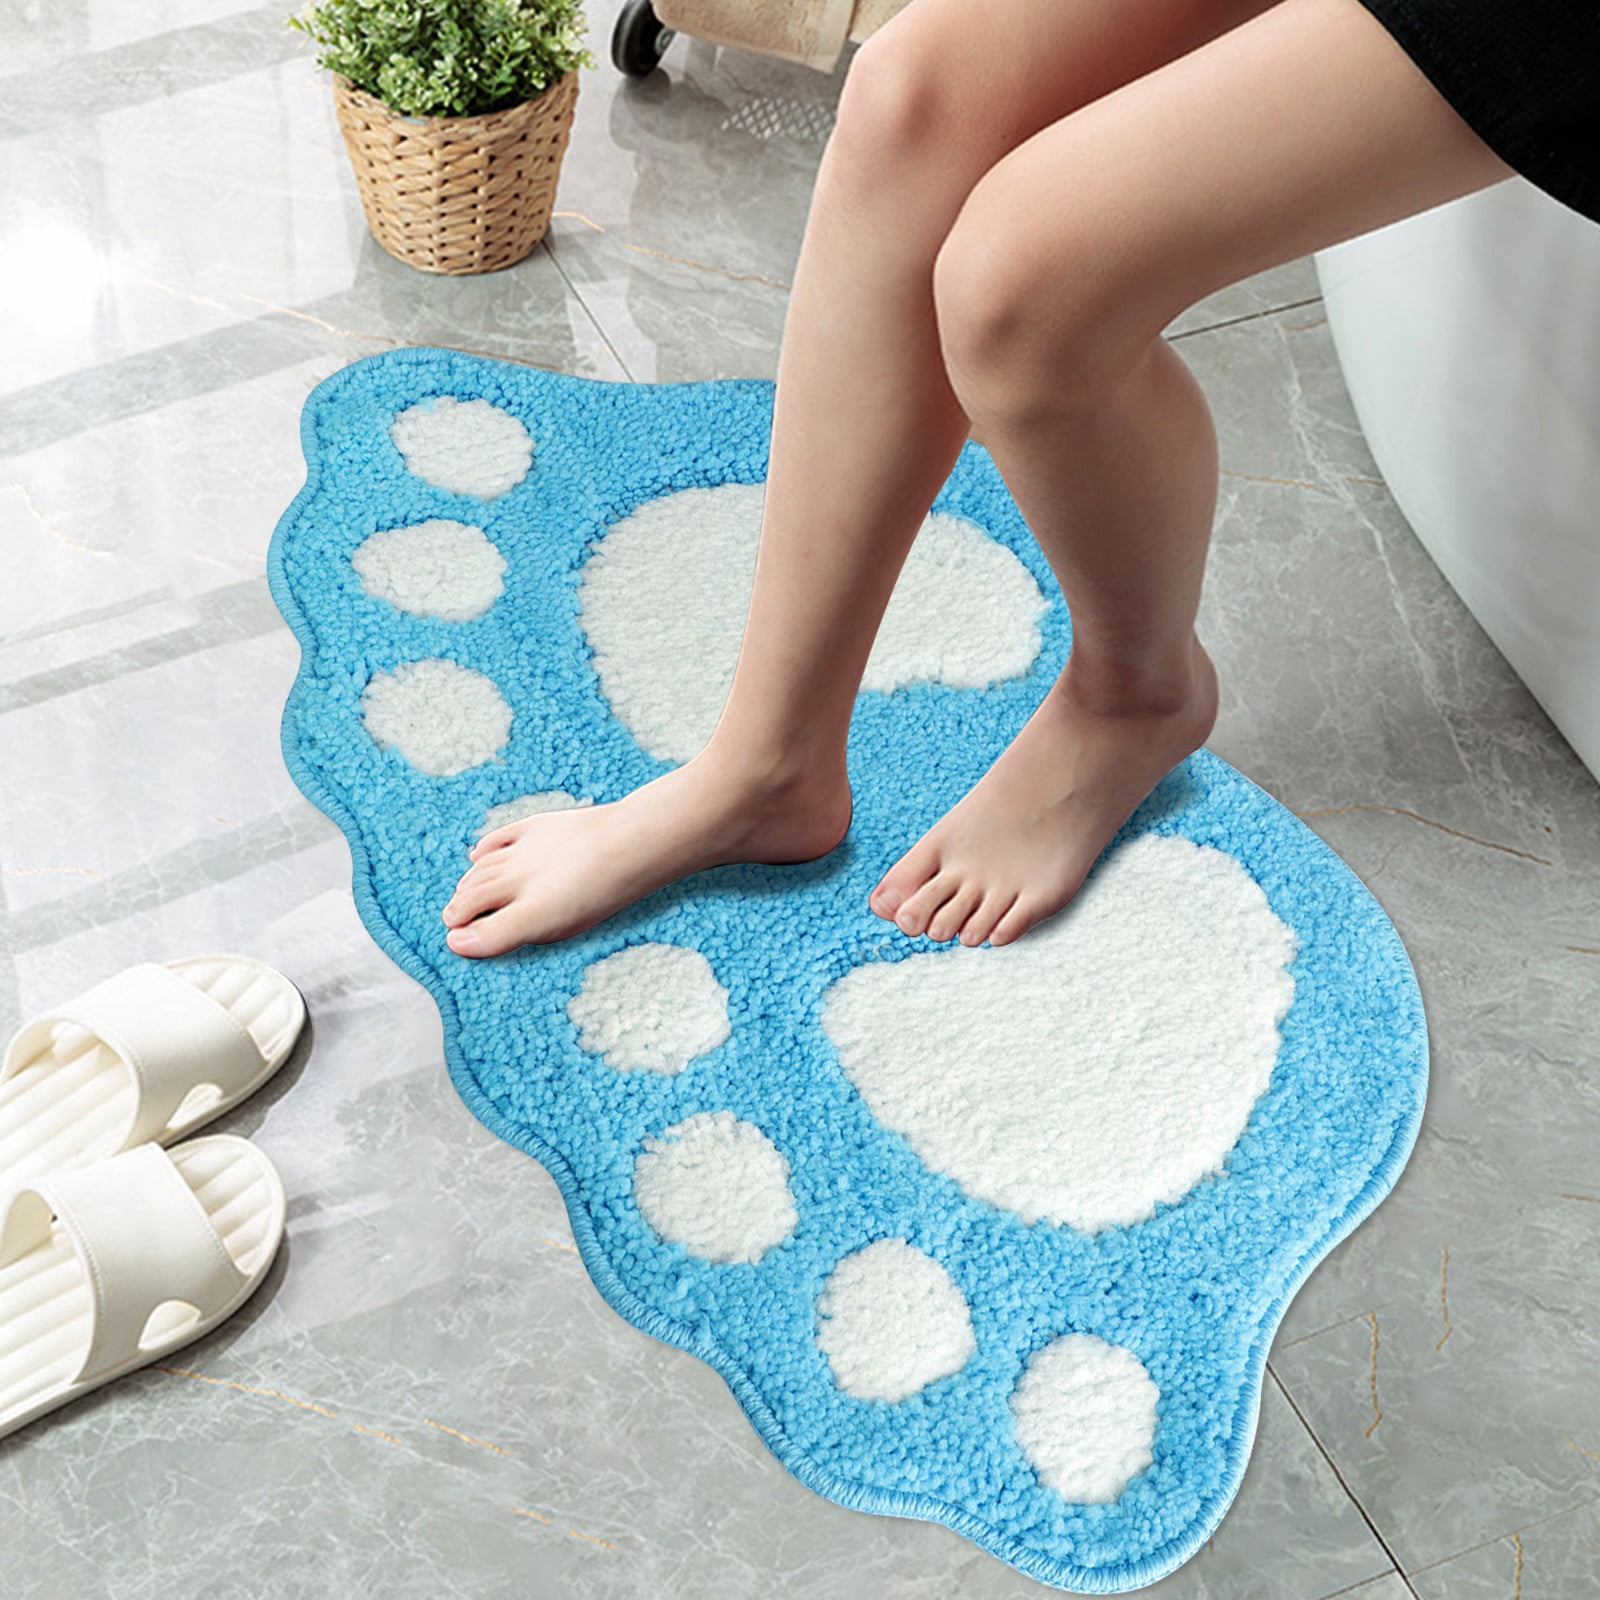 Microfibre Non Slip Soft Shaggy Absorbent Bath Bathroom Shower Rug Carpet Mat 